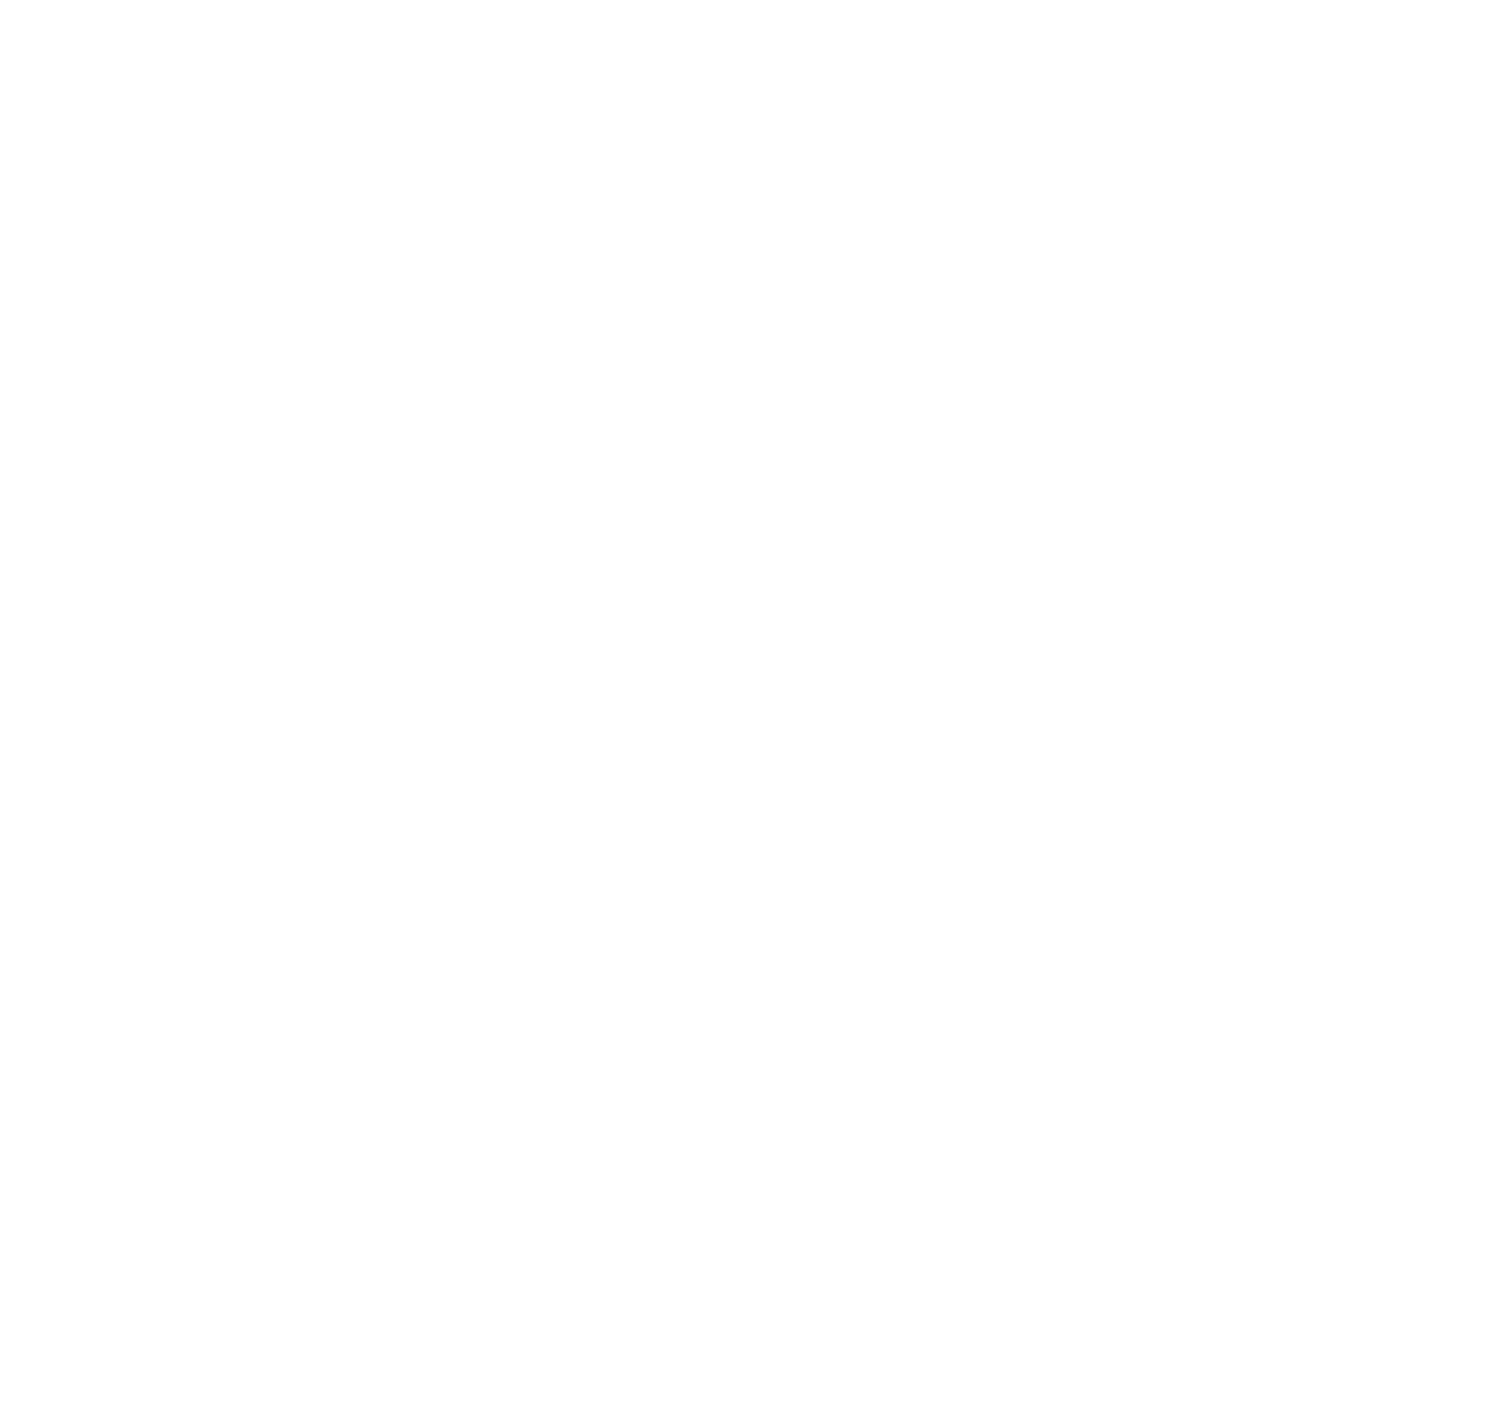 Dr. Harry Jol